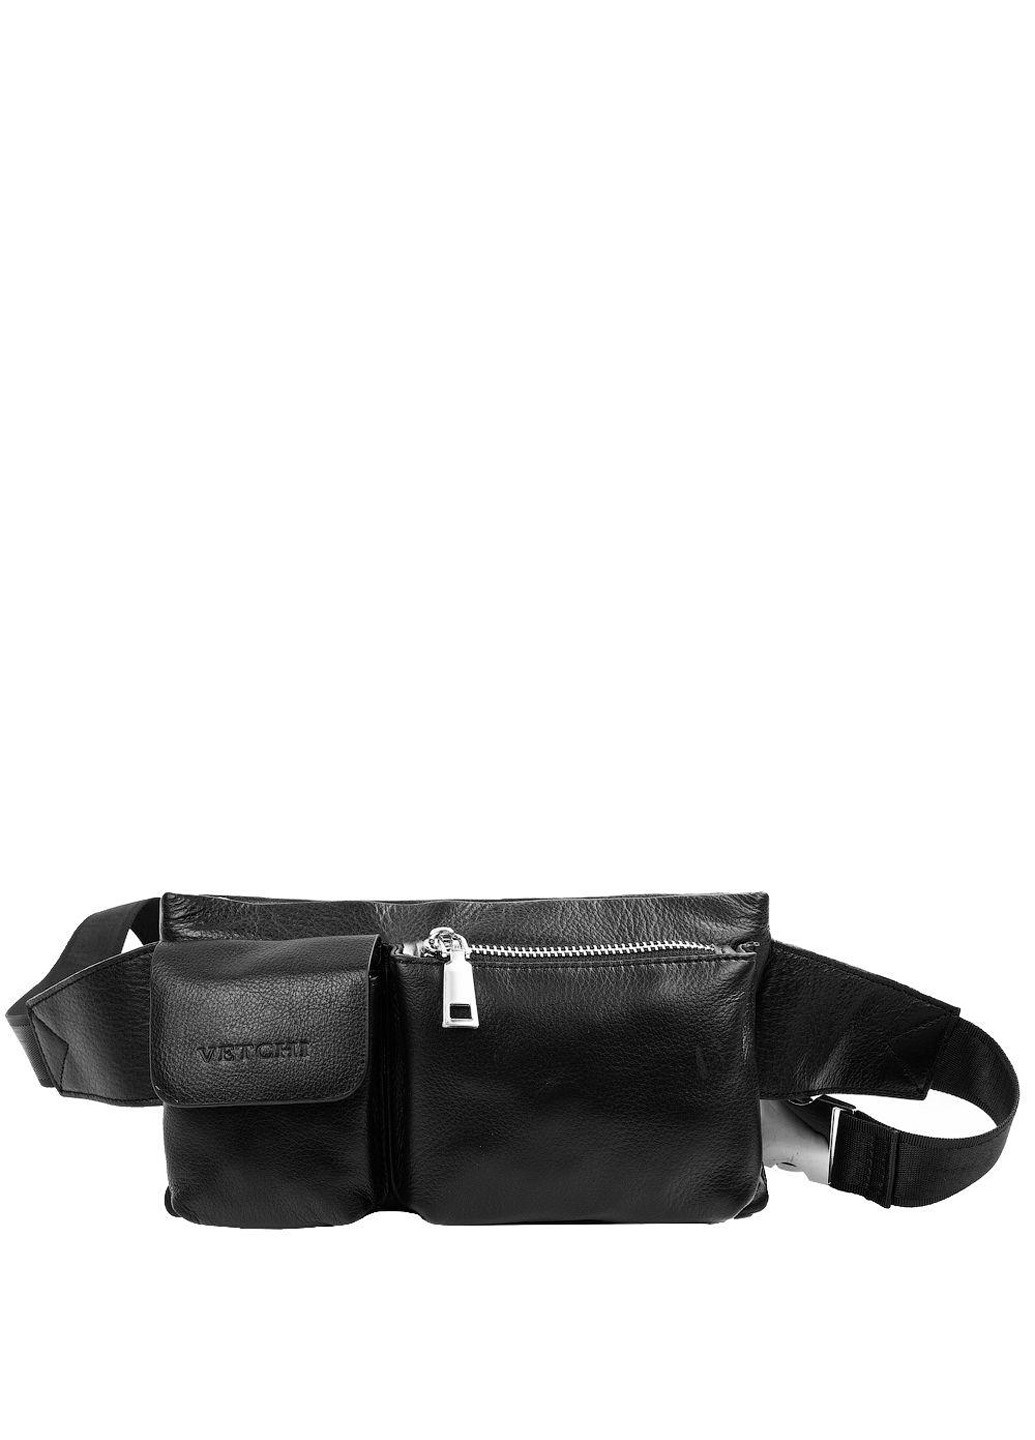 Женская кожаная поясная сумка 23х13х4,5 см Valiria Fashion (205132251)